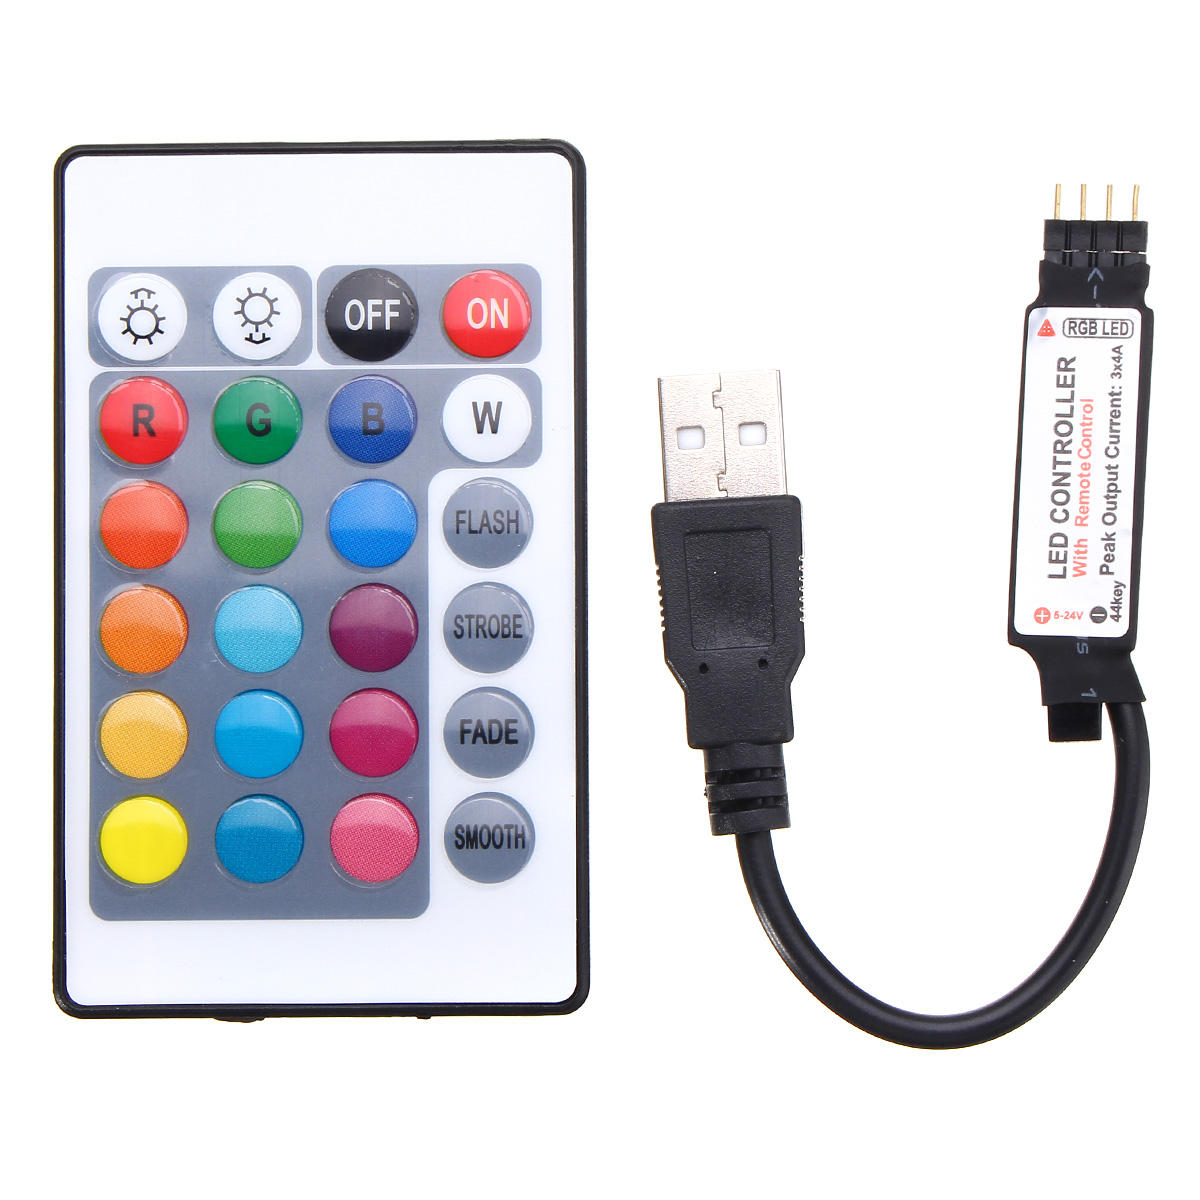 24 Keys USB LED Controller with Remote Control for DC5V 5050 RGB Strip Light